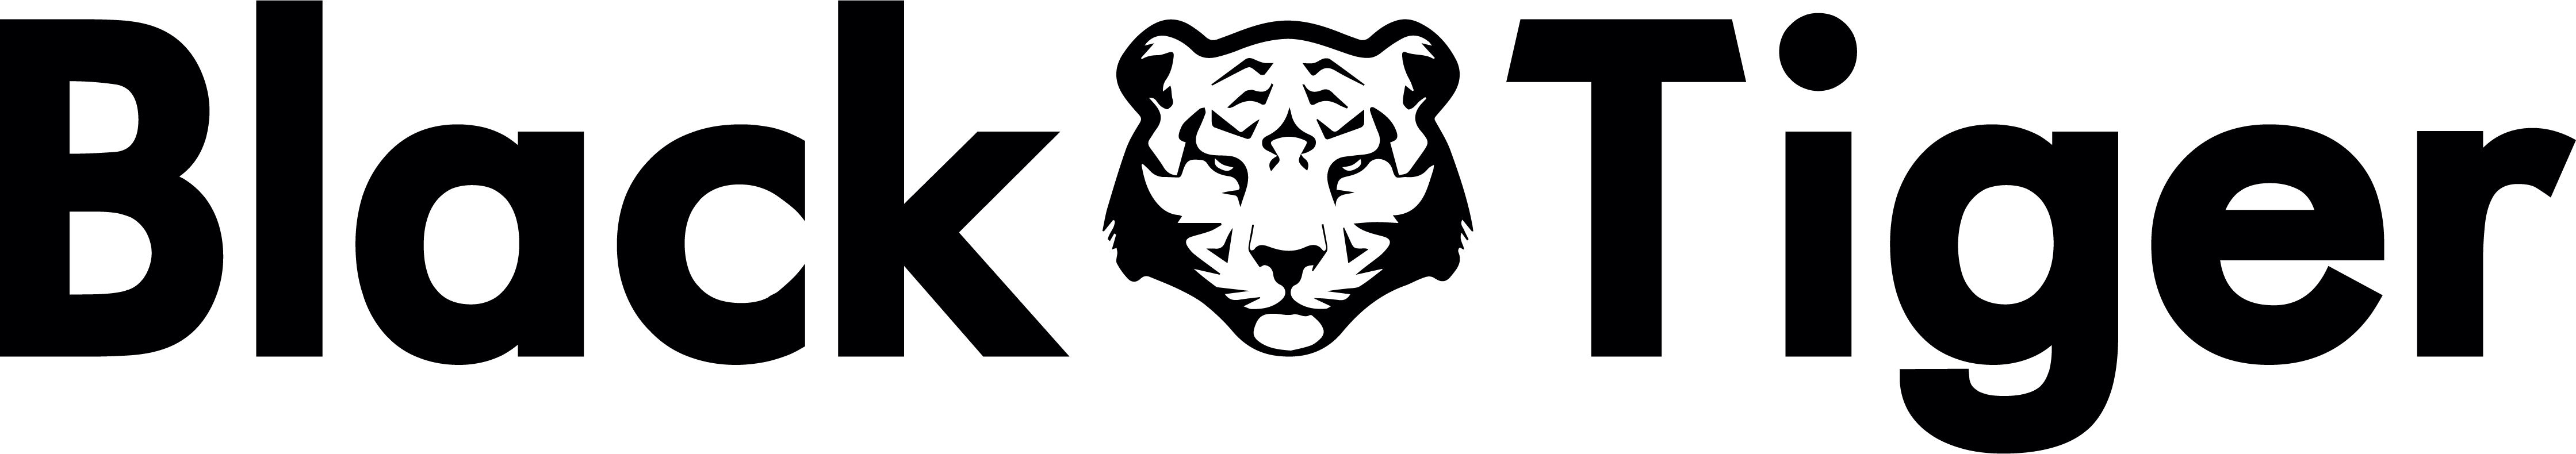 BlackTiger-logo